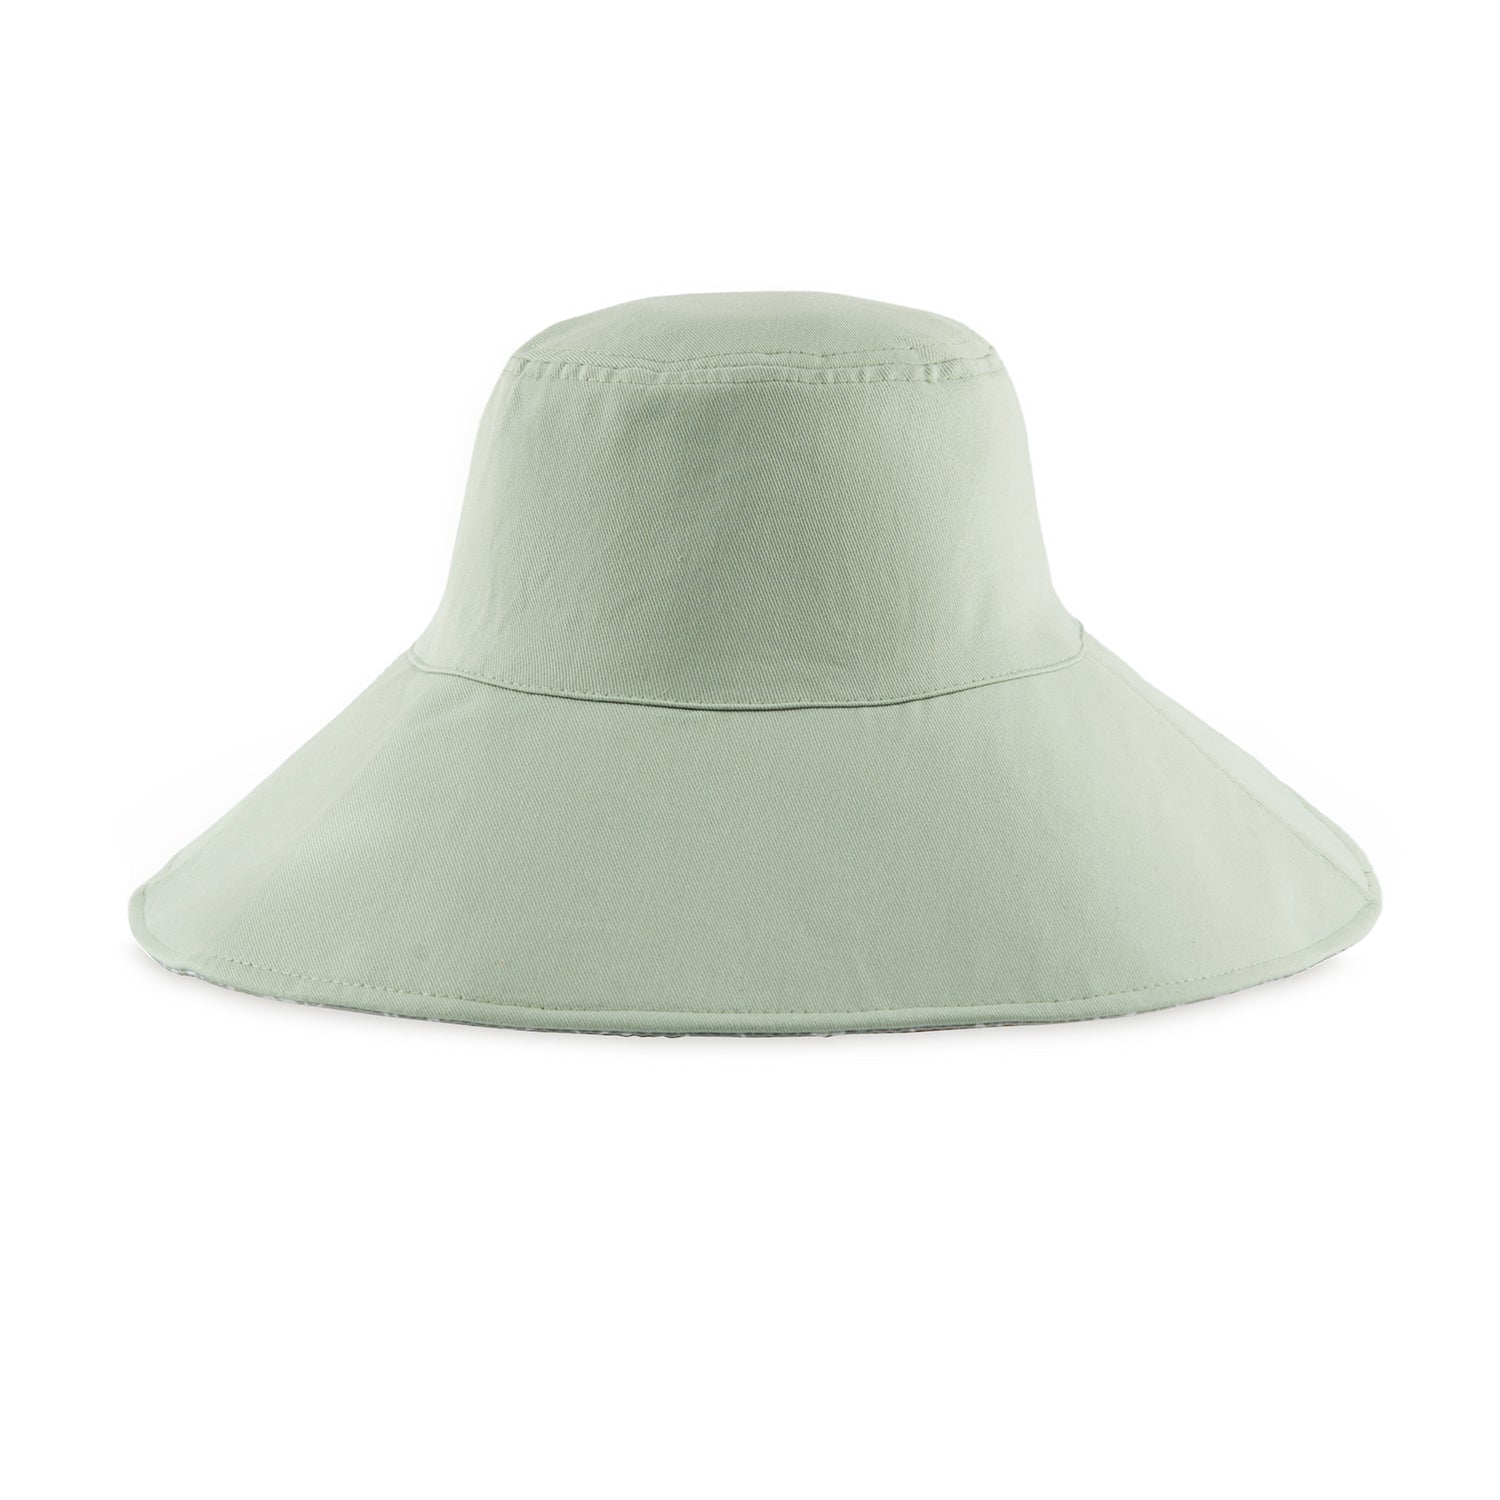 Outdoor Hats  Shop UPF50+ hats online - Hat World Australia